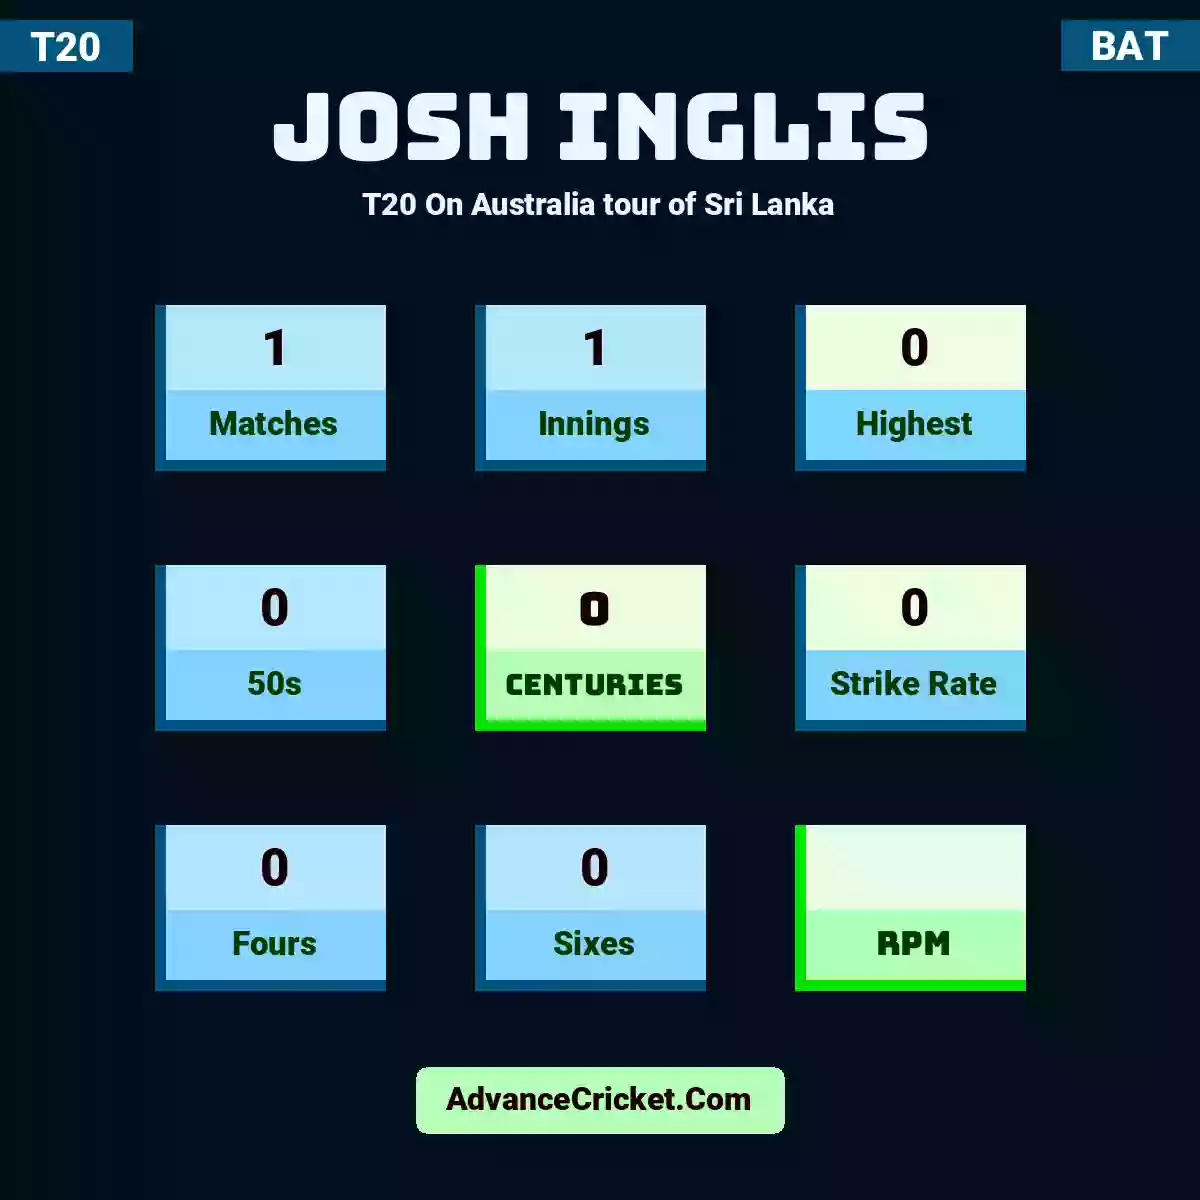 Josh Inglis T20  On Australia tour of Sri Lanka, Josh Inglis played 1 matches, scored 0 runs as highest, 0 half-centuries, and 0 centuries, with a strike rate of 0. J.Inglis hit 0 fours and 0 sixes.